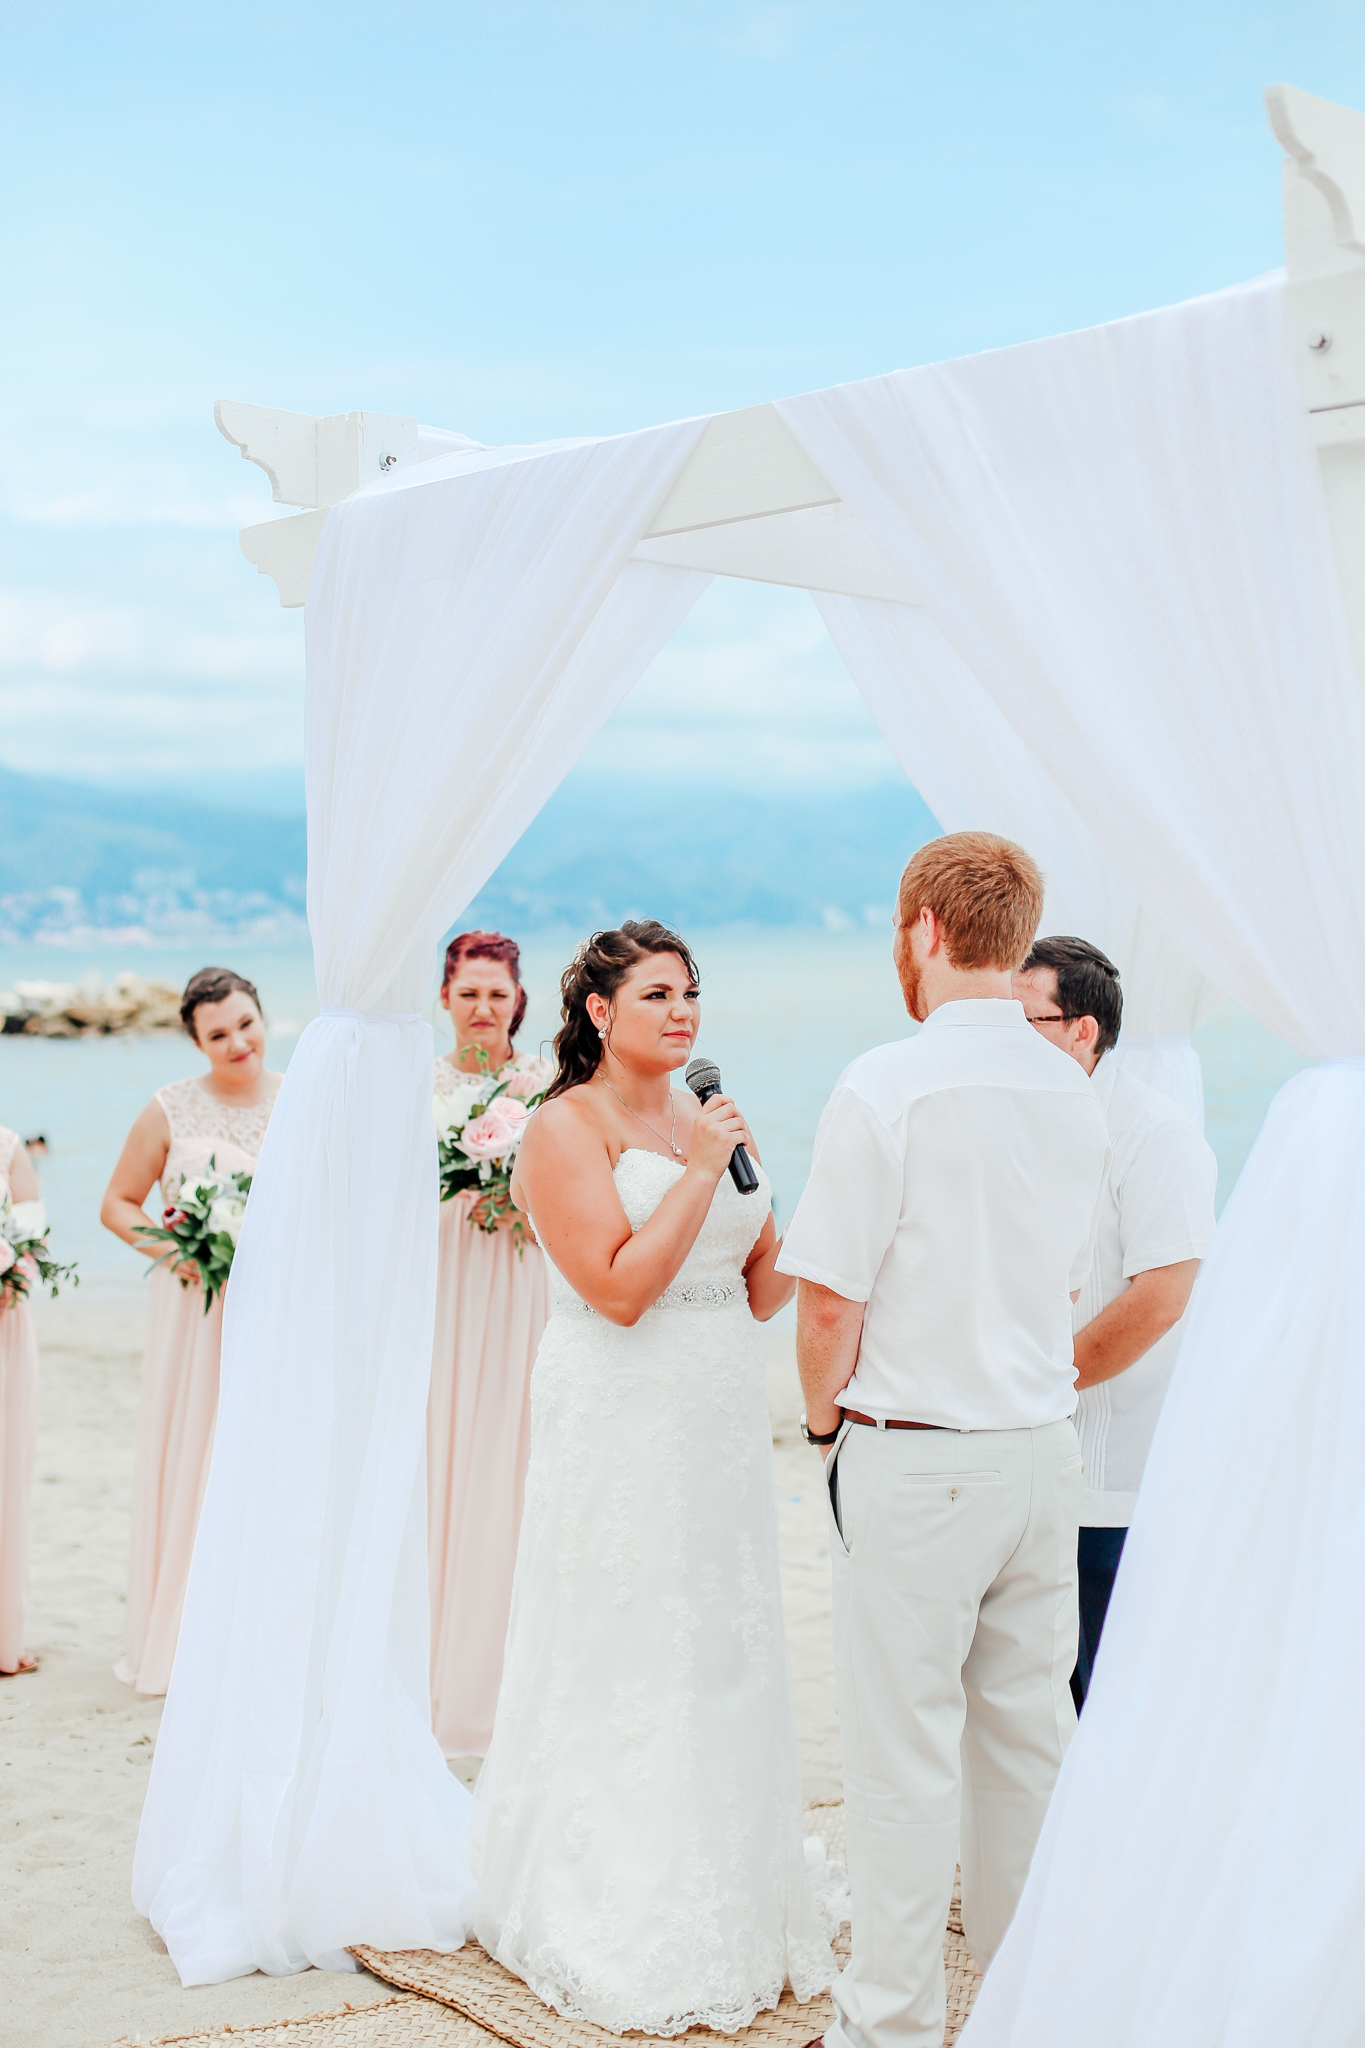 Tiffany and Ryan - Puerto Vallarta Wedding Photographer - 54.jpg